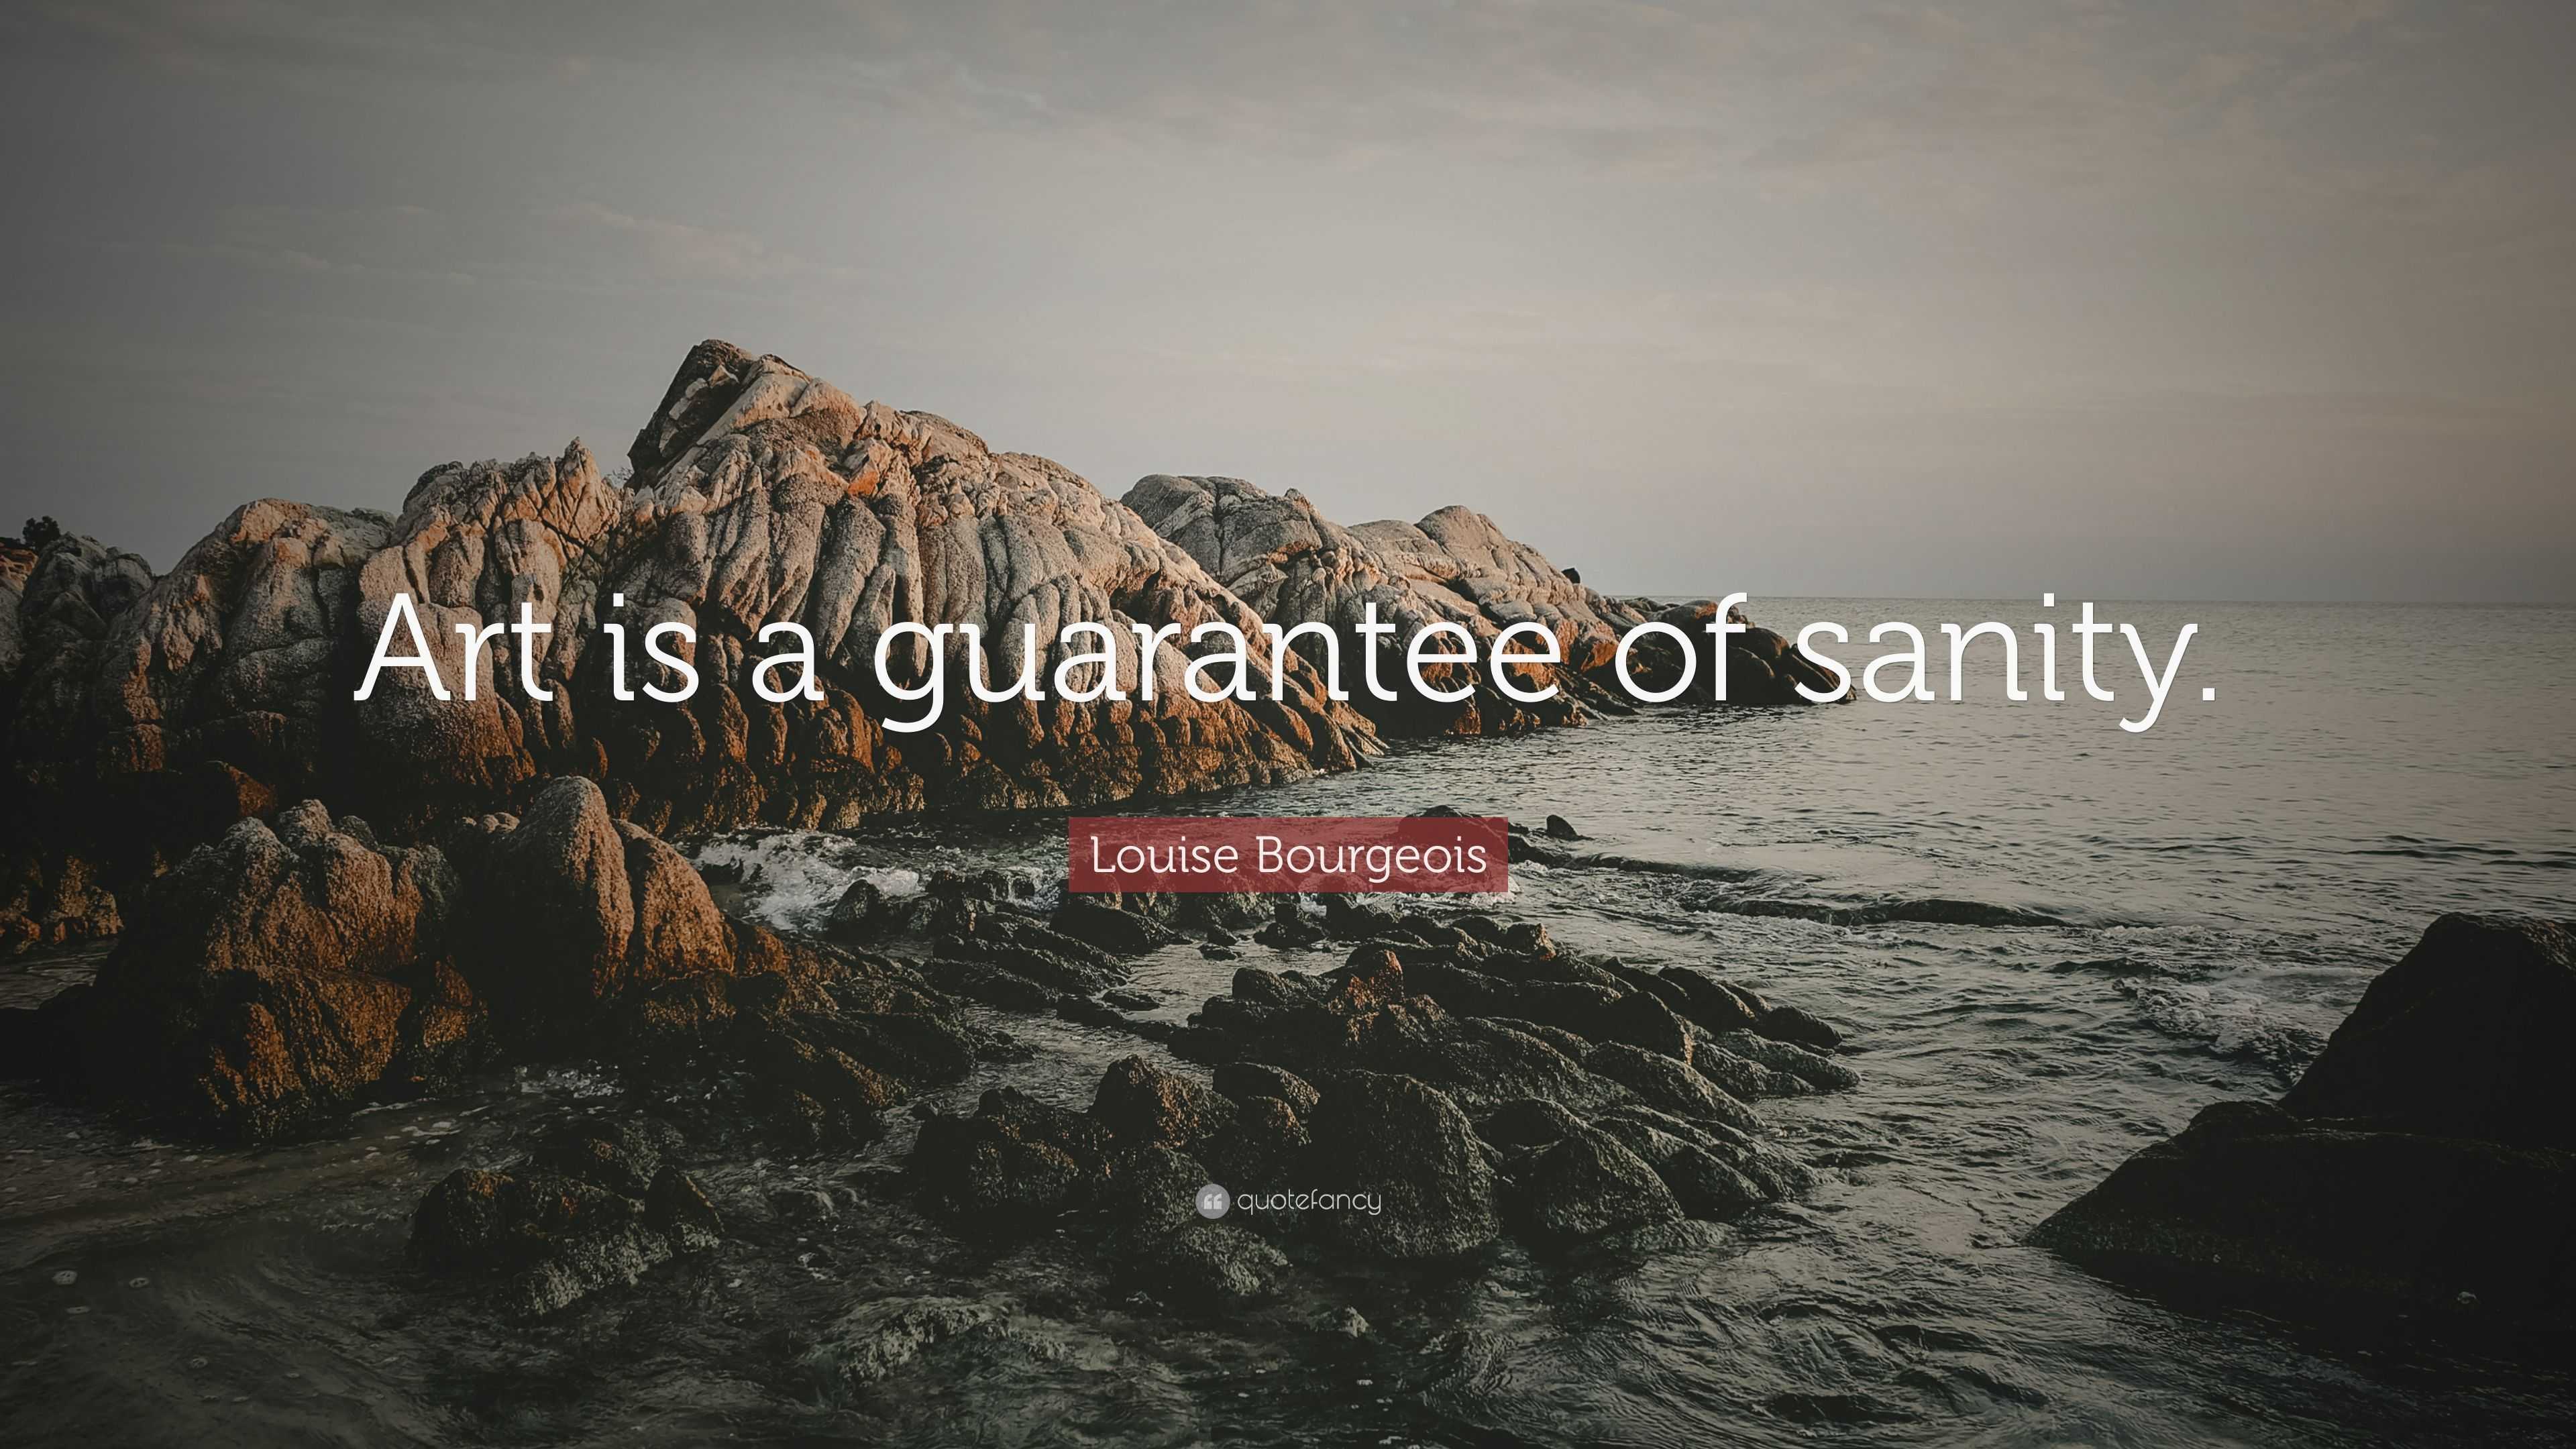 Louise Bourgeois's Guarantee of Sanity 